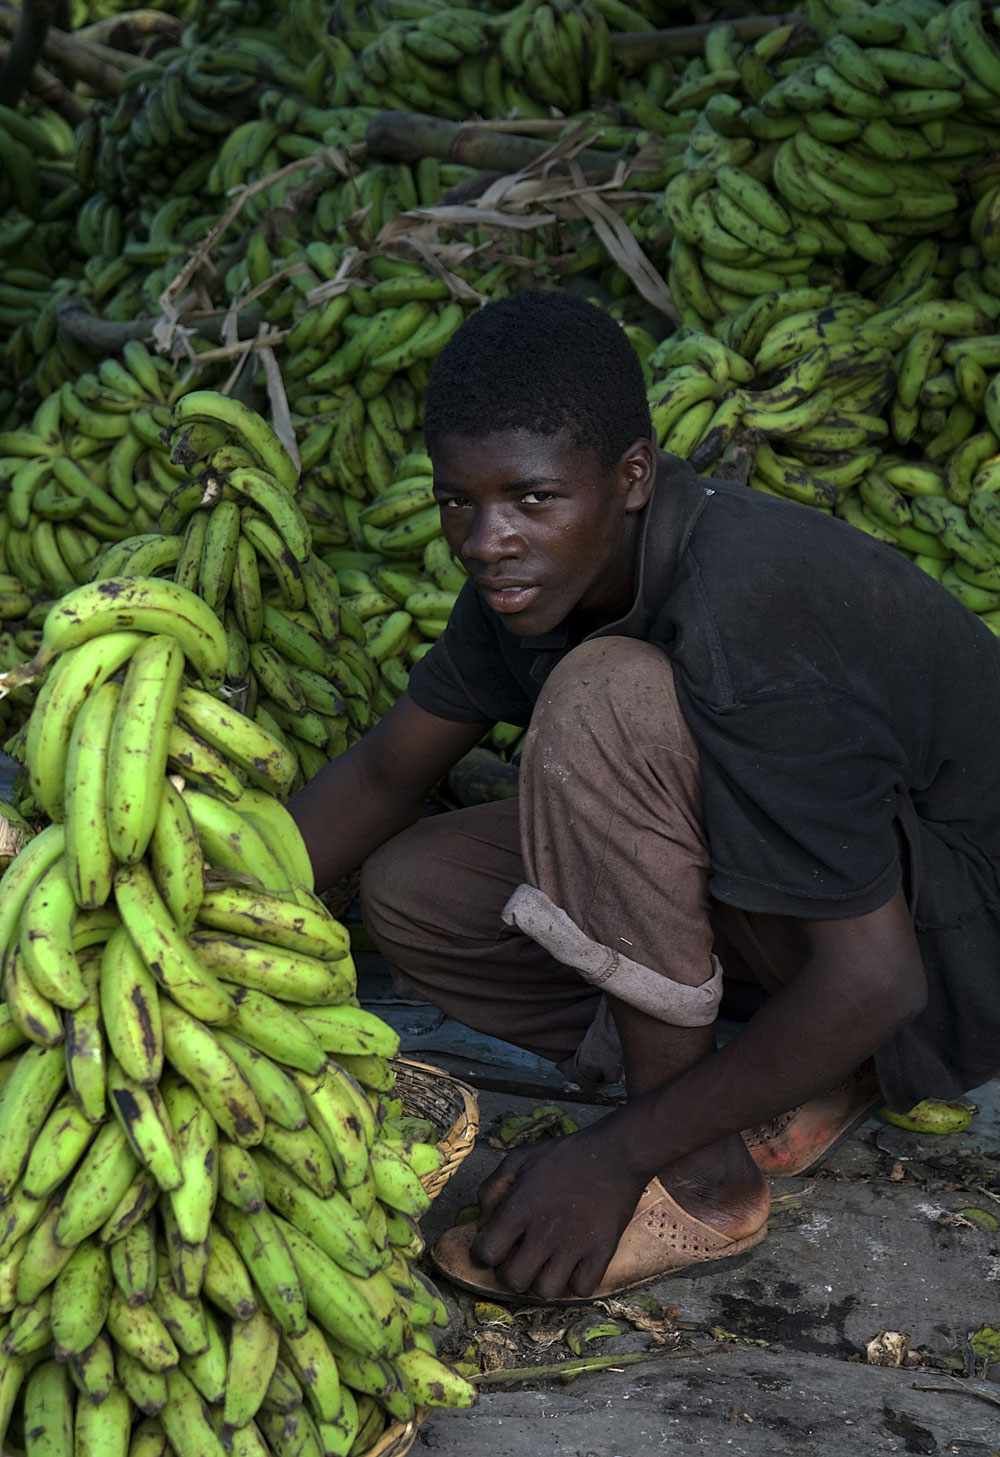 Haitian boy selling bananas